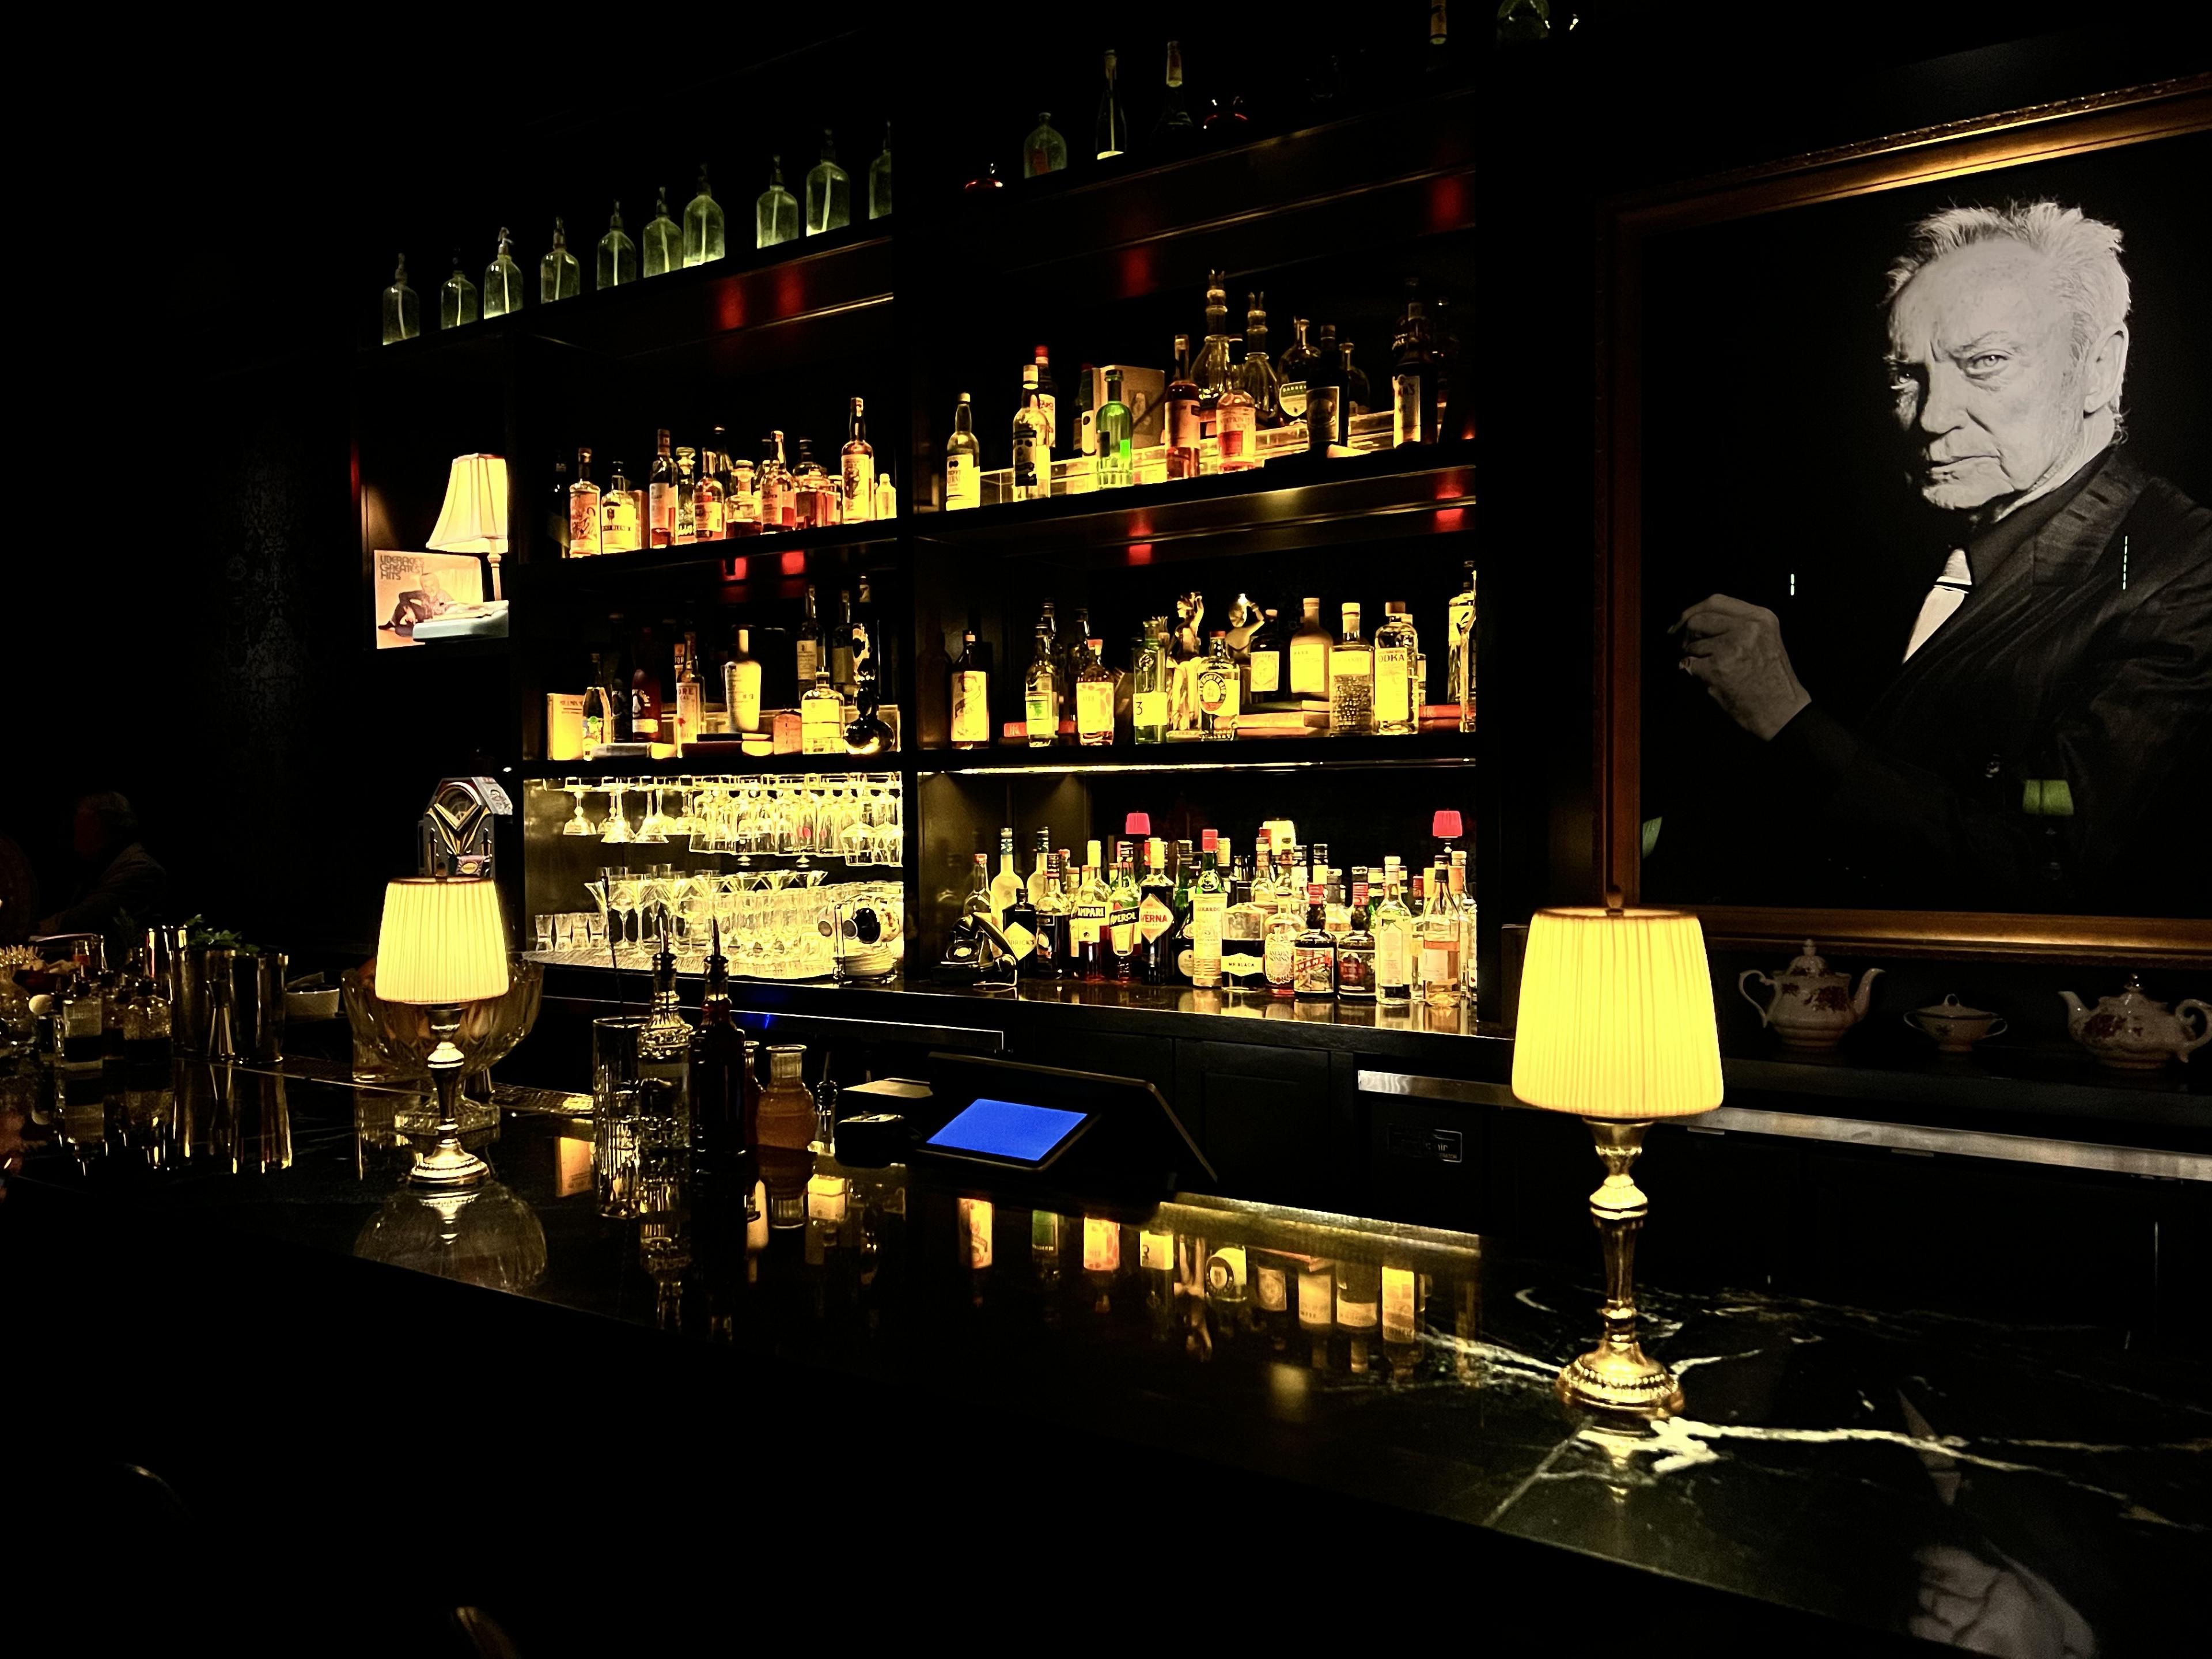 dark bar with liquor bottles lining the walls